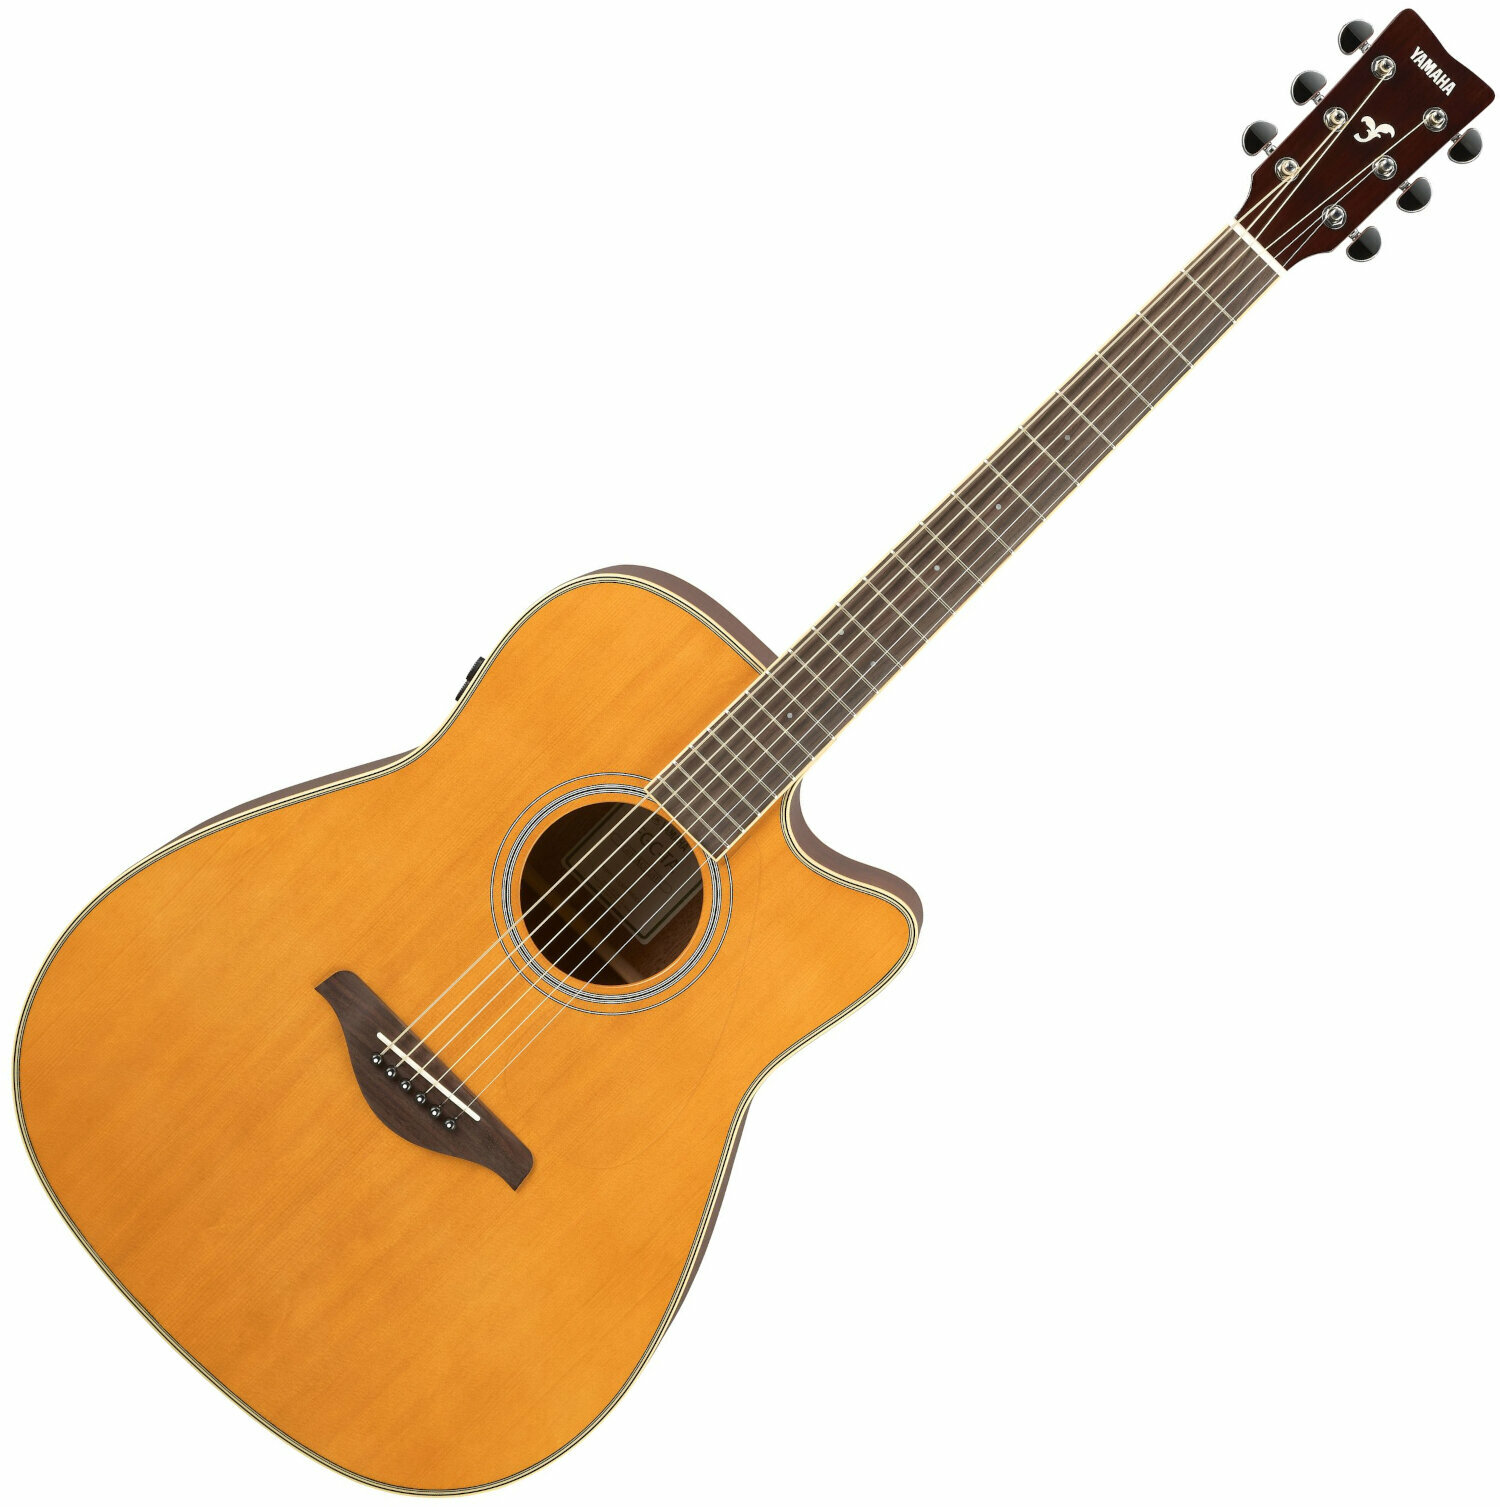 Yamaha Fgc-ta Transacoustic Cutaway Epicea Acajou Rw - Vintage Tint - Acoustic guitar & electro - Variation 1